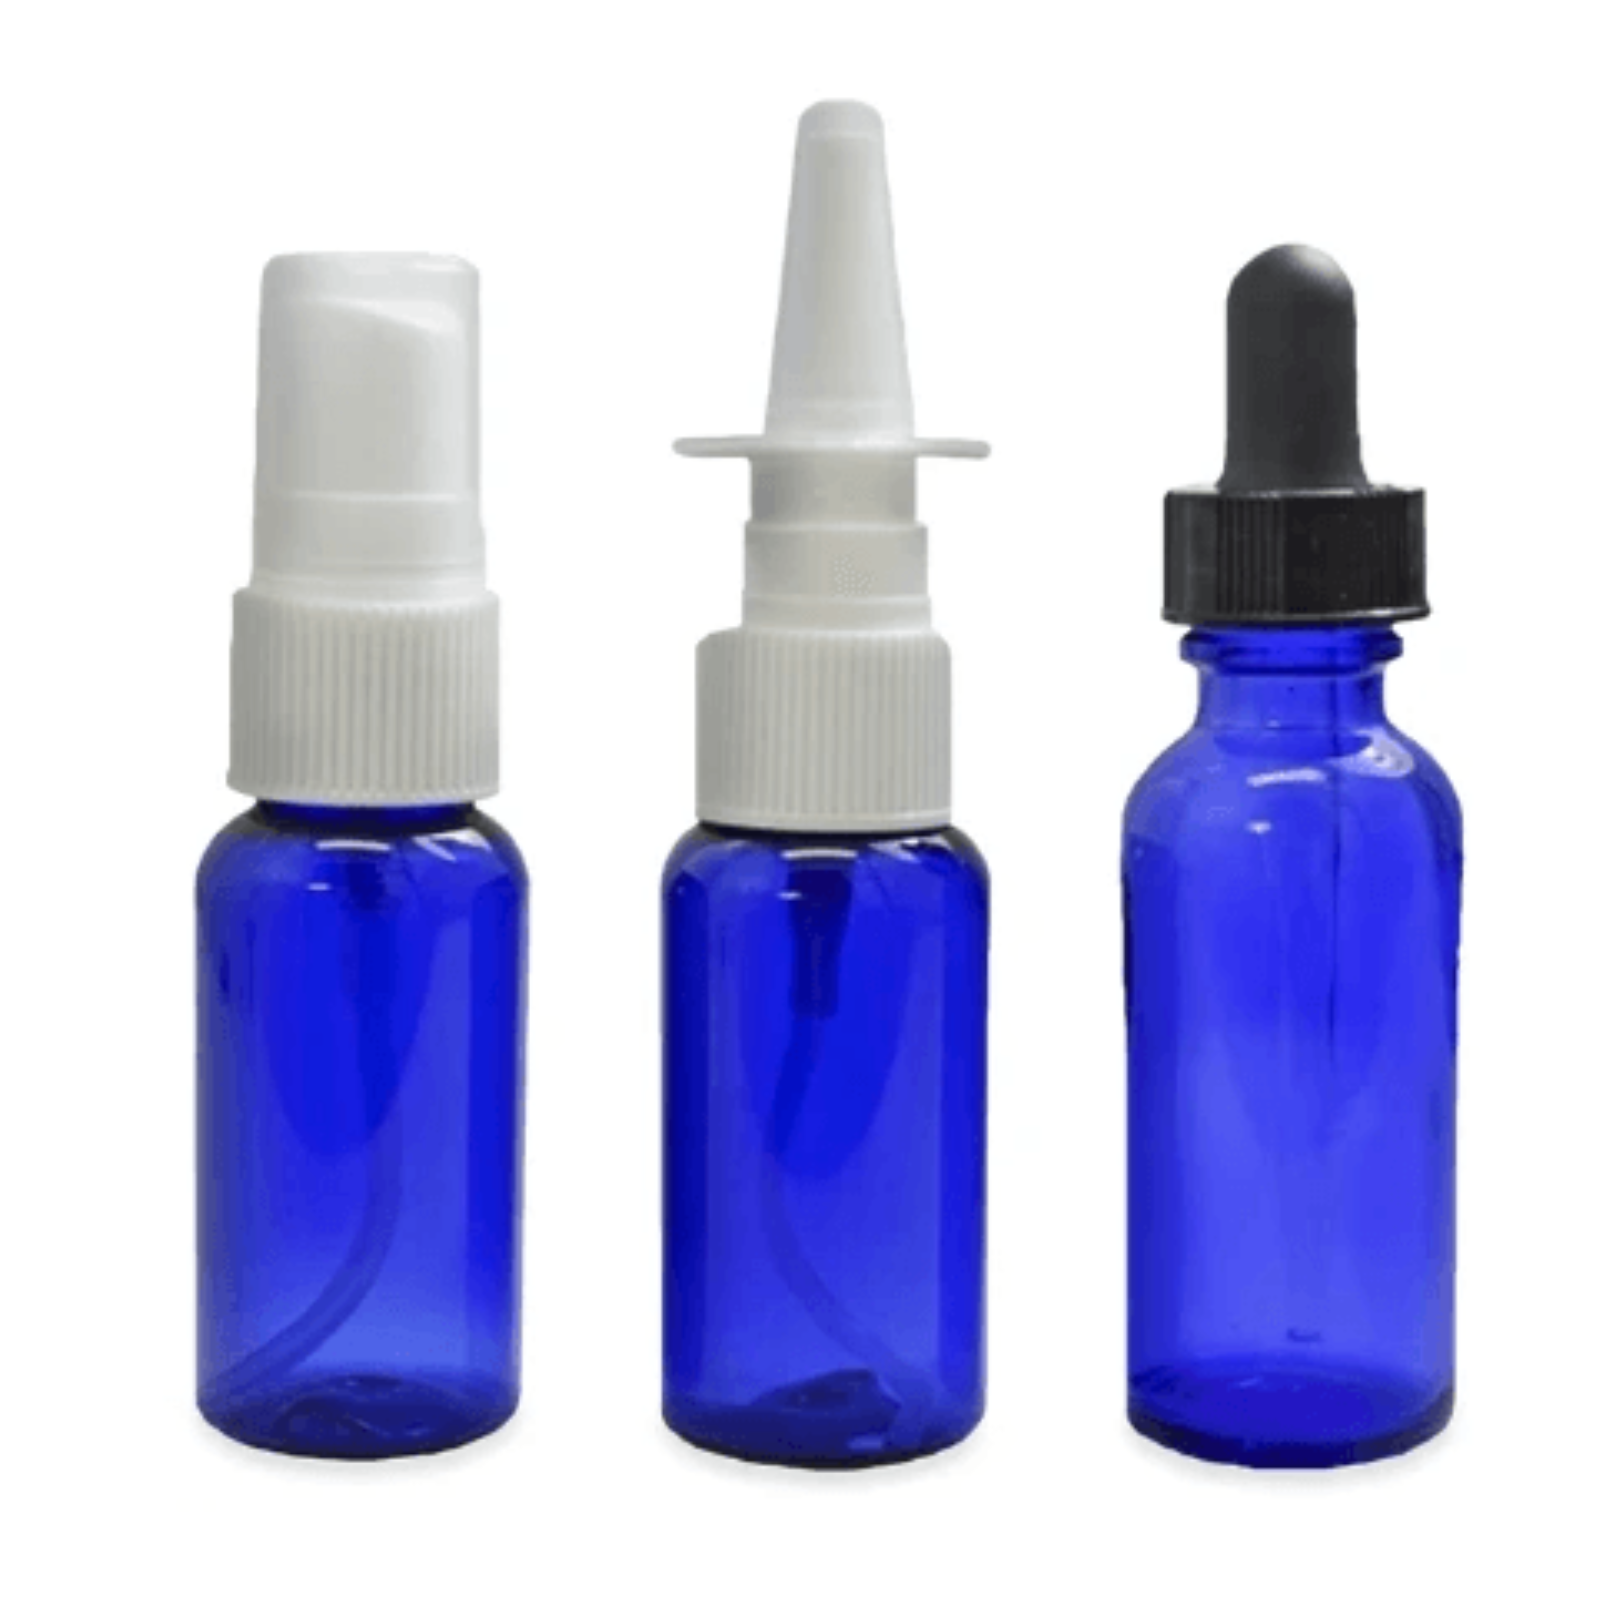 3 Bottle Applicator Set in Blue